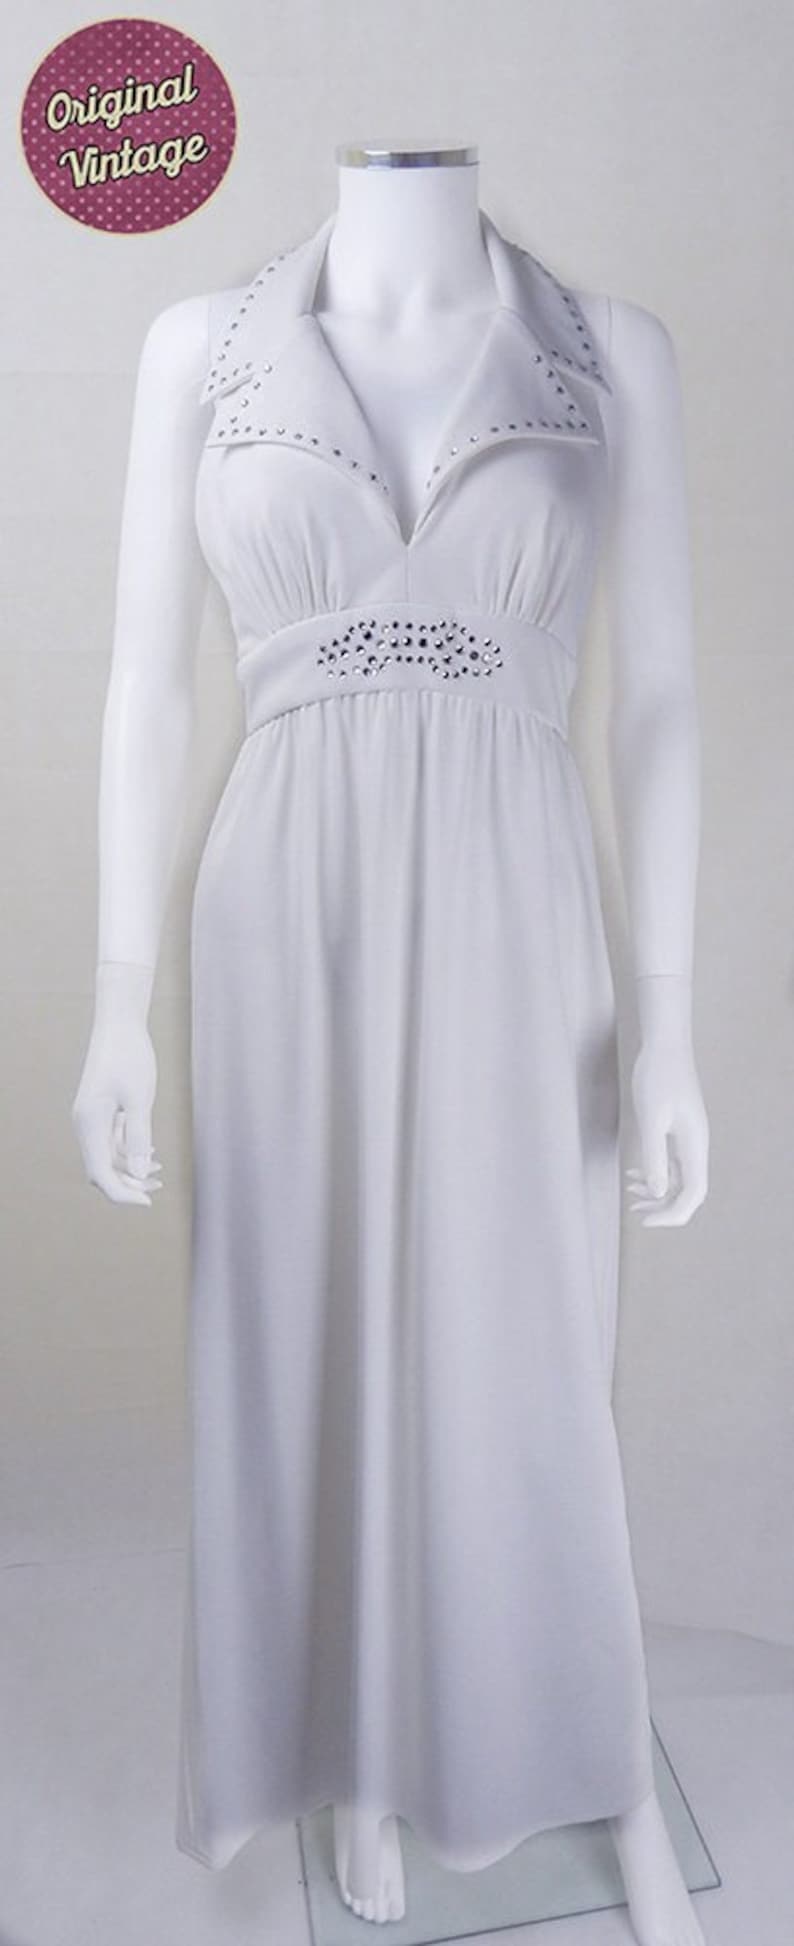 Halston Vintage Dress Original 1970s Designer Vintage Halston White Halter Dress UK Size 10 designer dress, 1970s Halston dress image 1